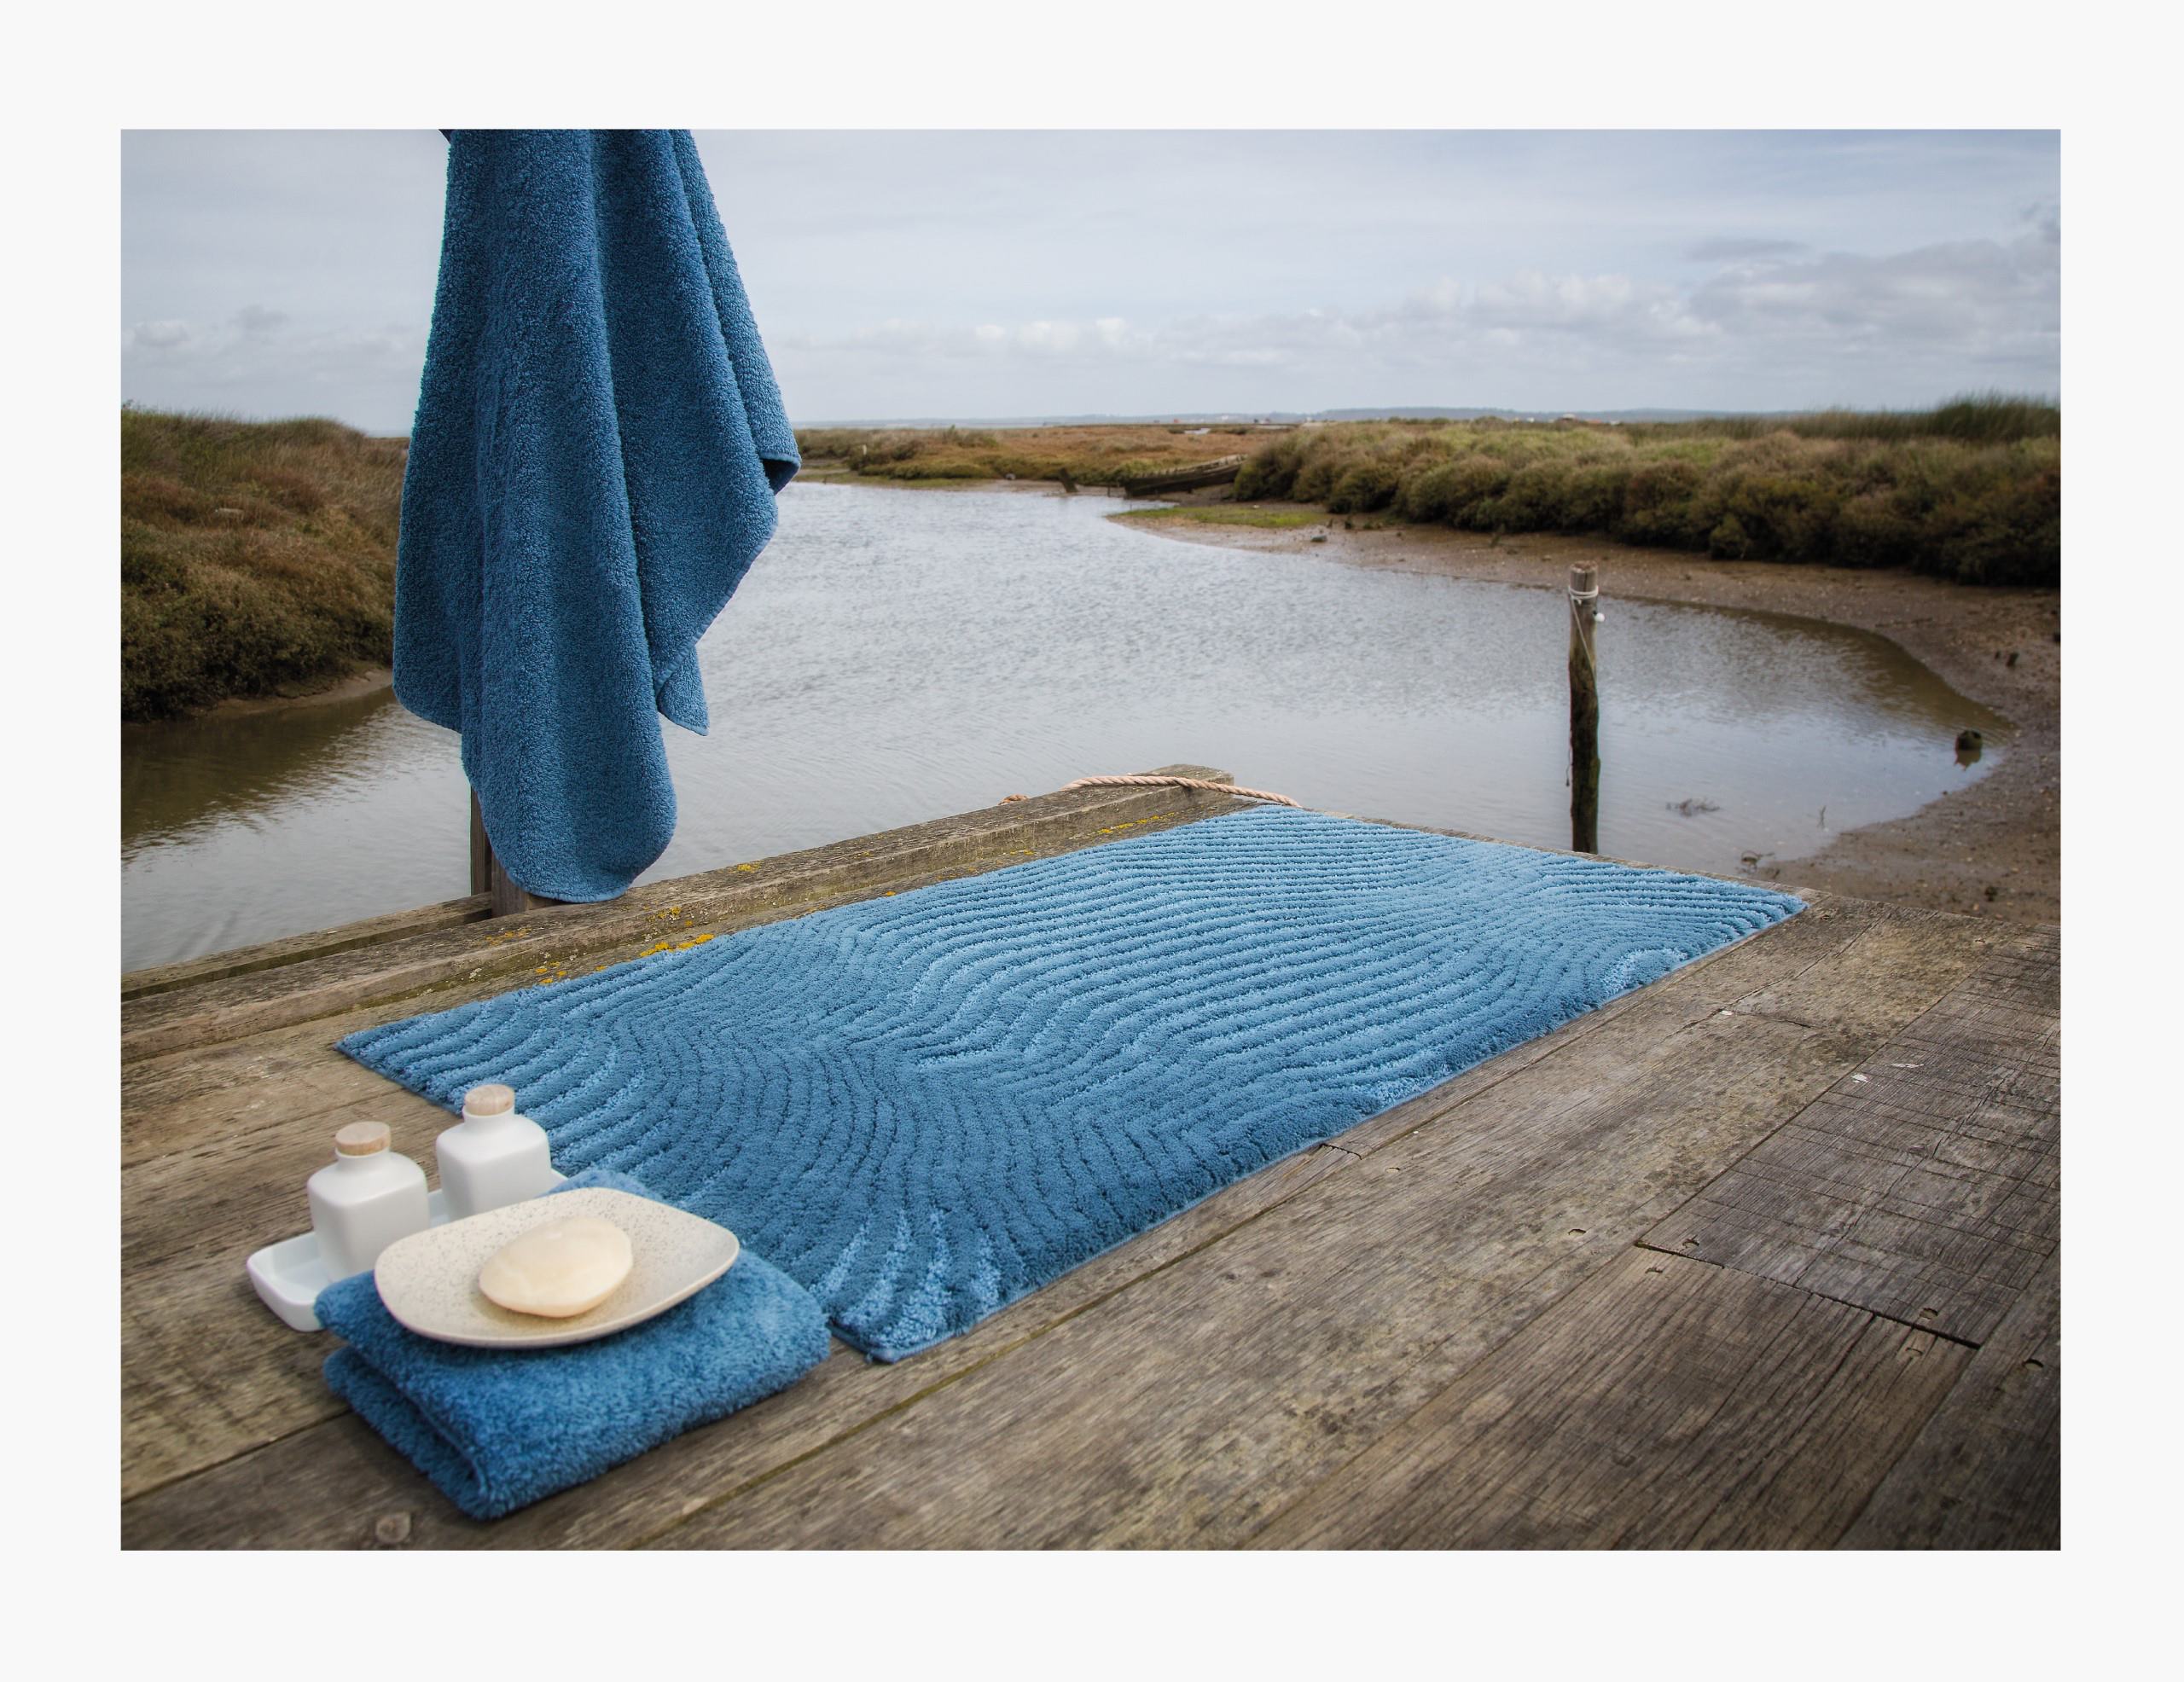 Abyss Super Pile Bath Towels & Mats - Evergreen